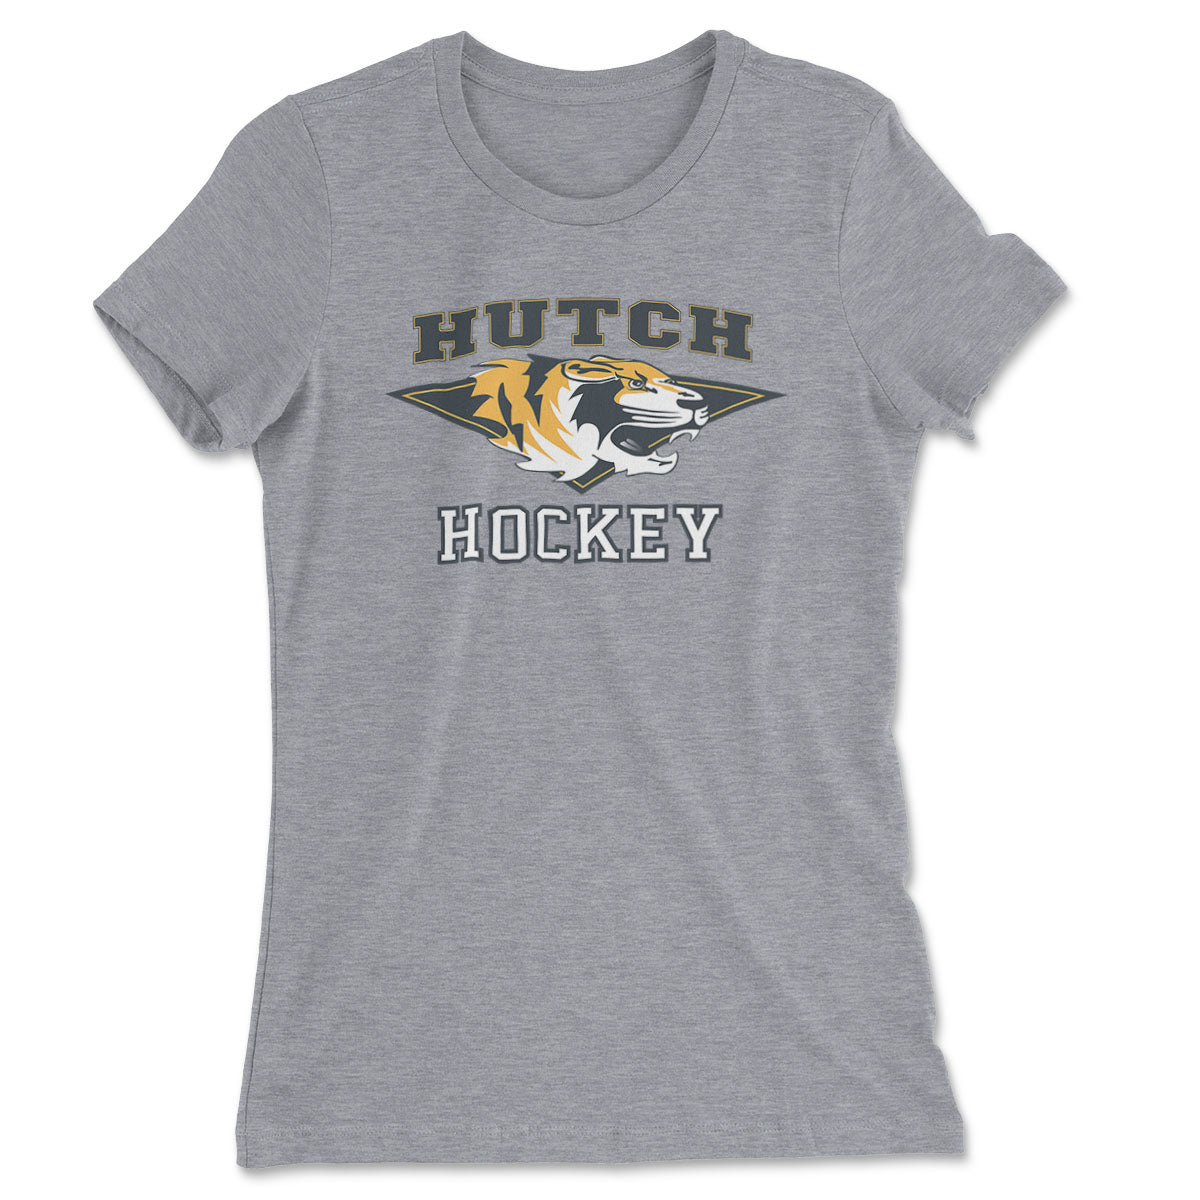 Hutchinson Hockey // Women's Tee